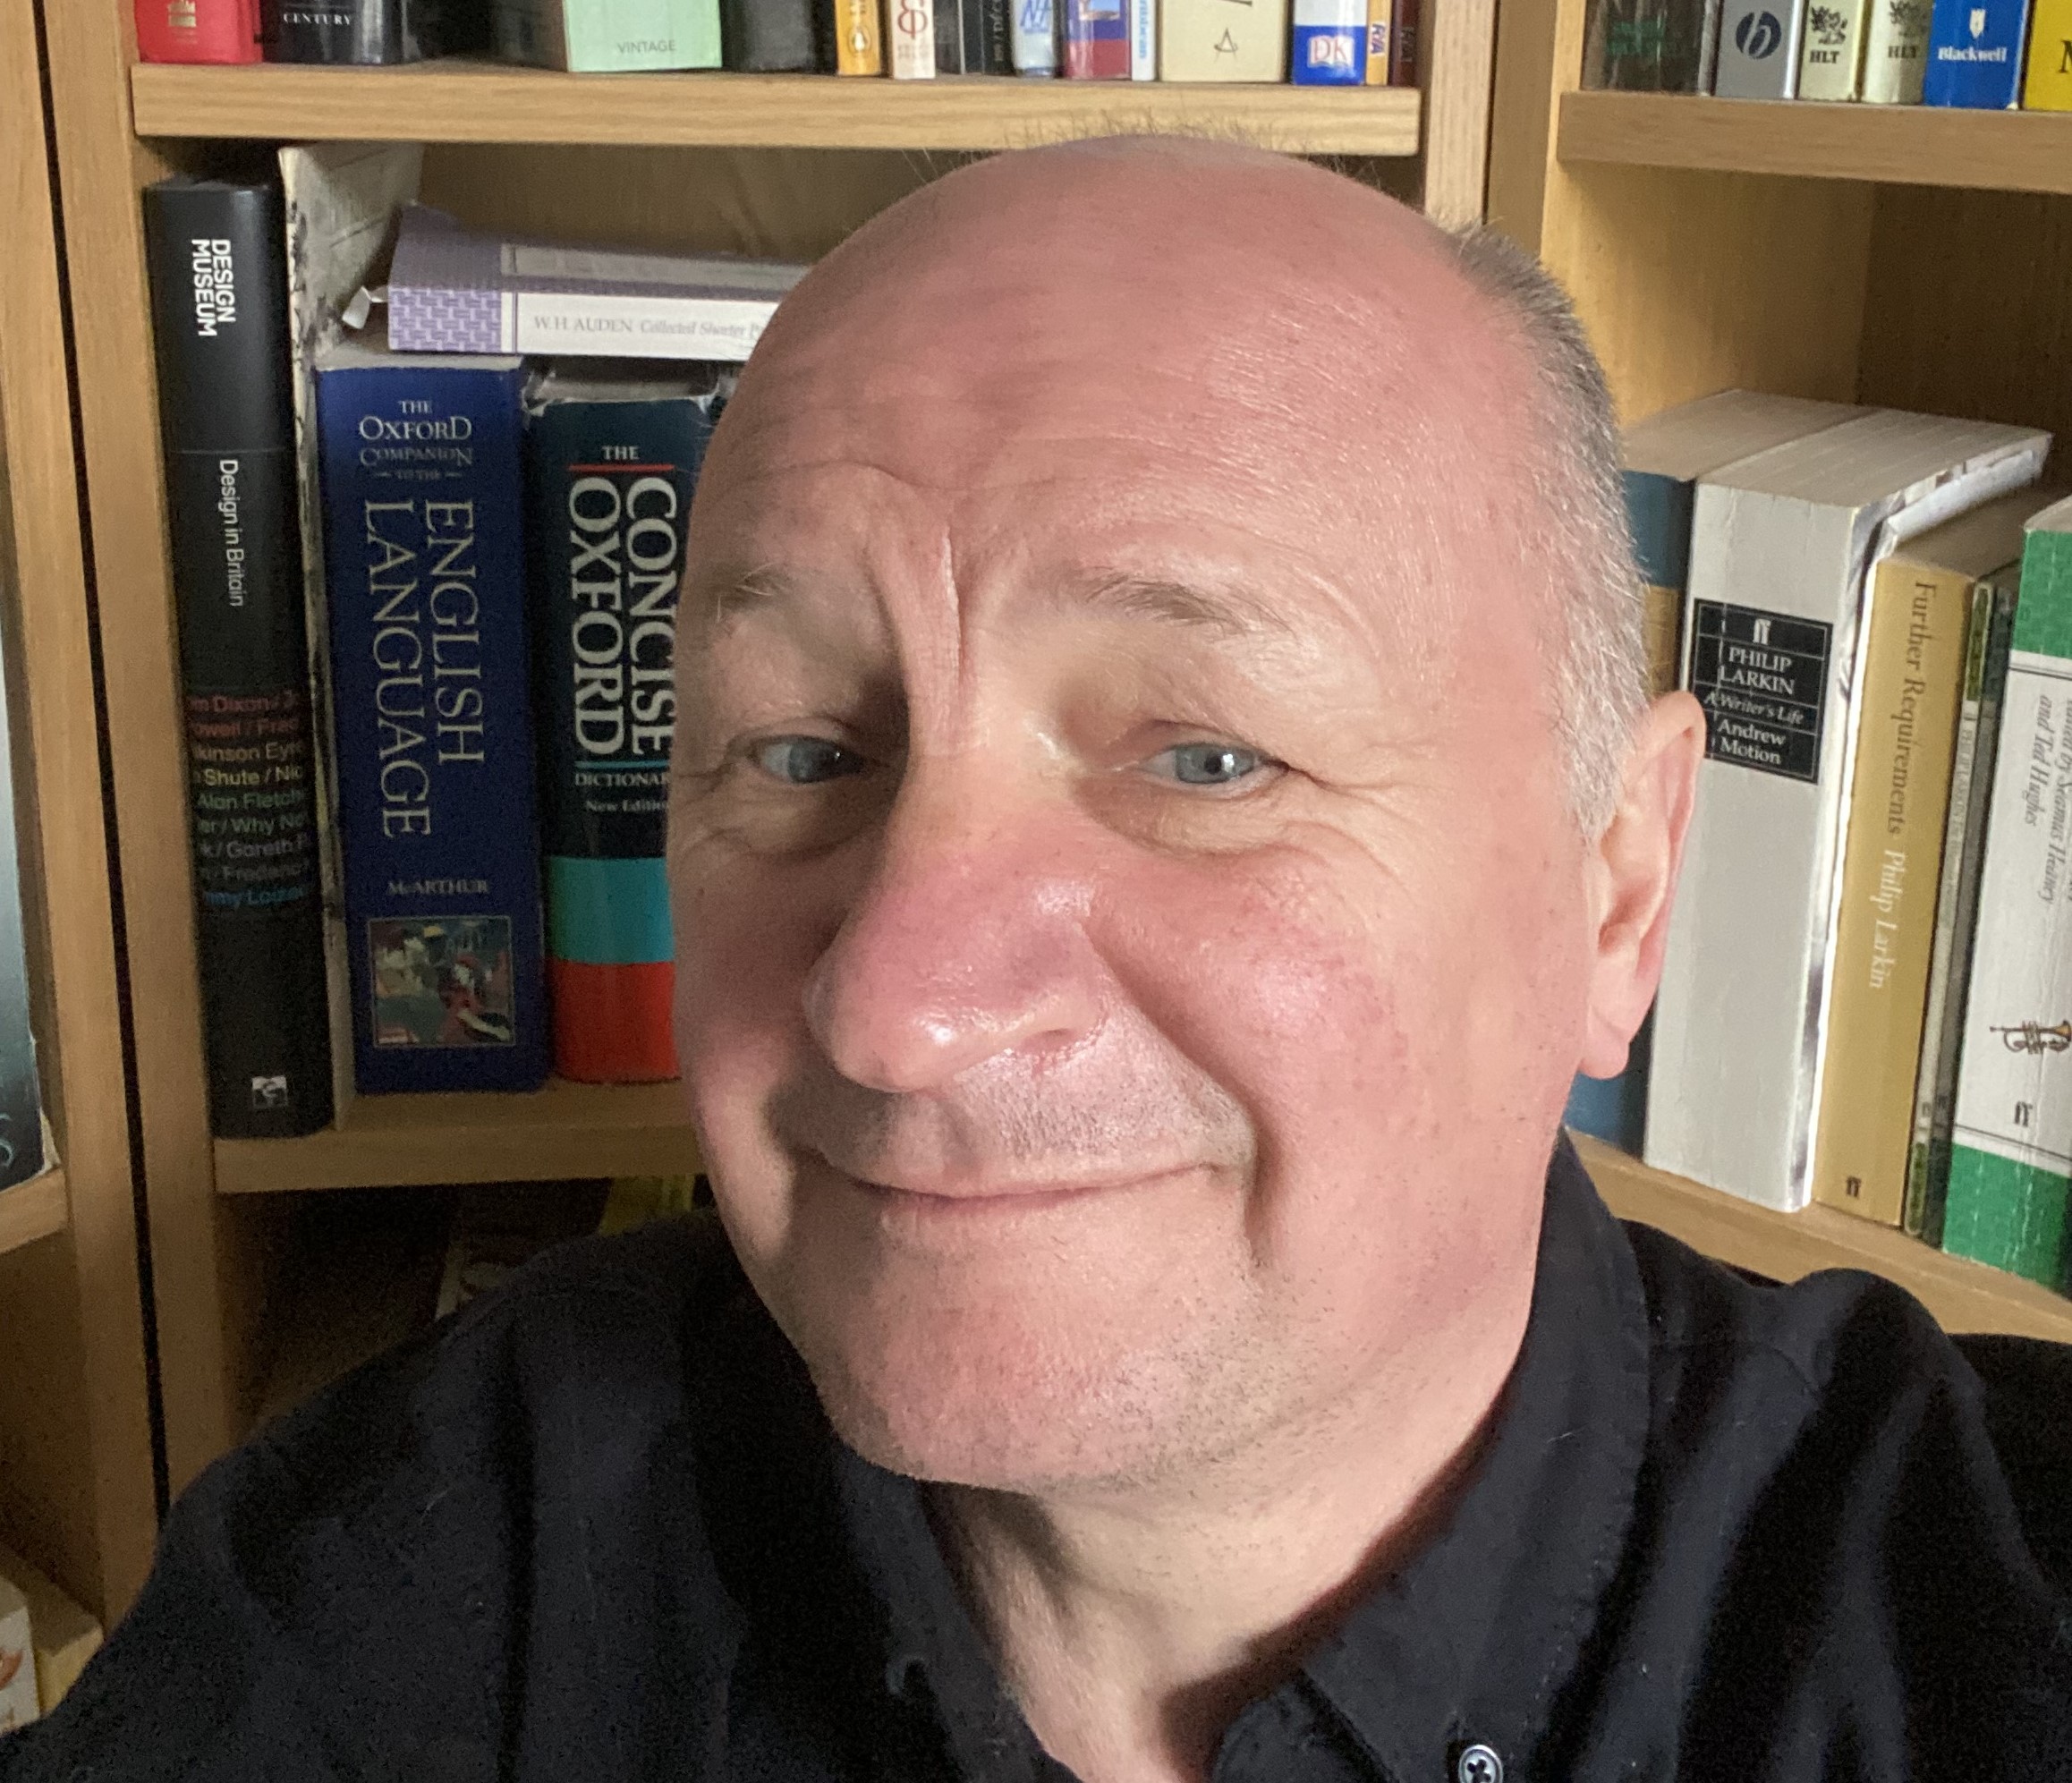 A selfie of an older man in front of a bookshelf